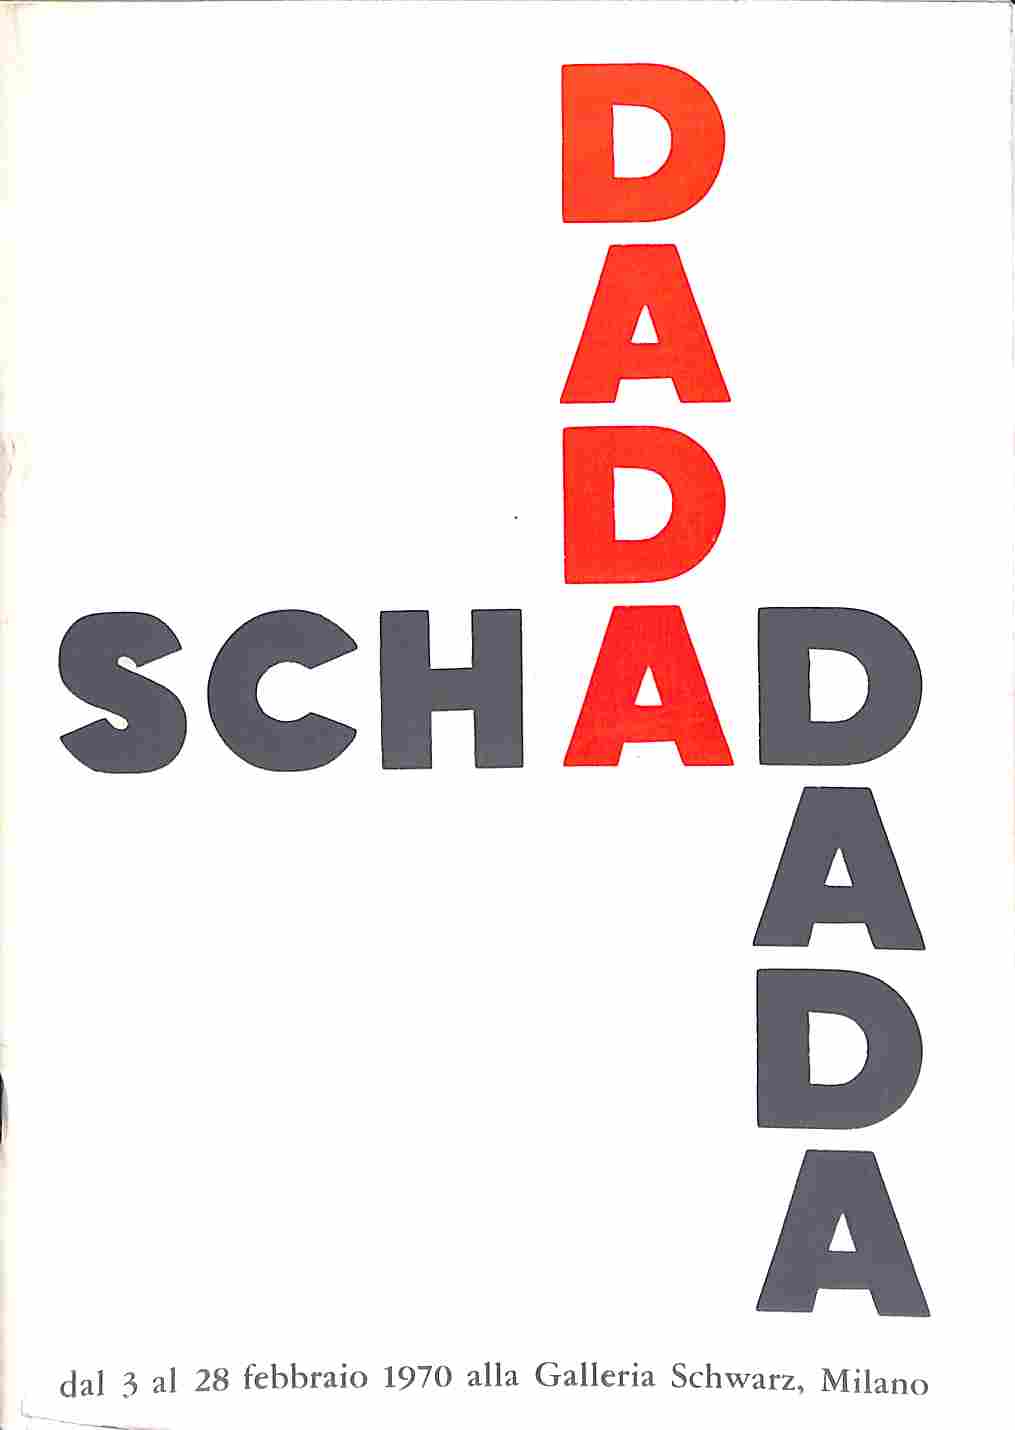 Christian Schad dal 3 al 28 febbraio 1970 alla Galleria Schwarz, Milano